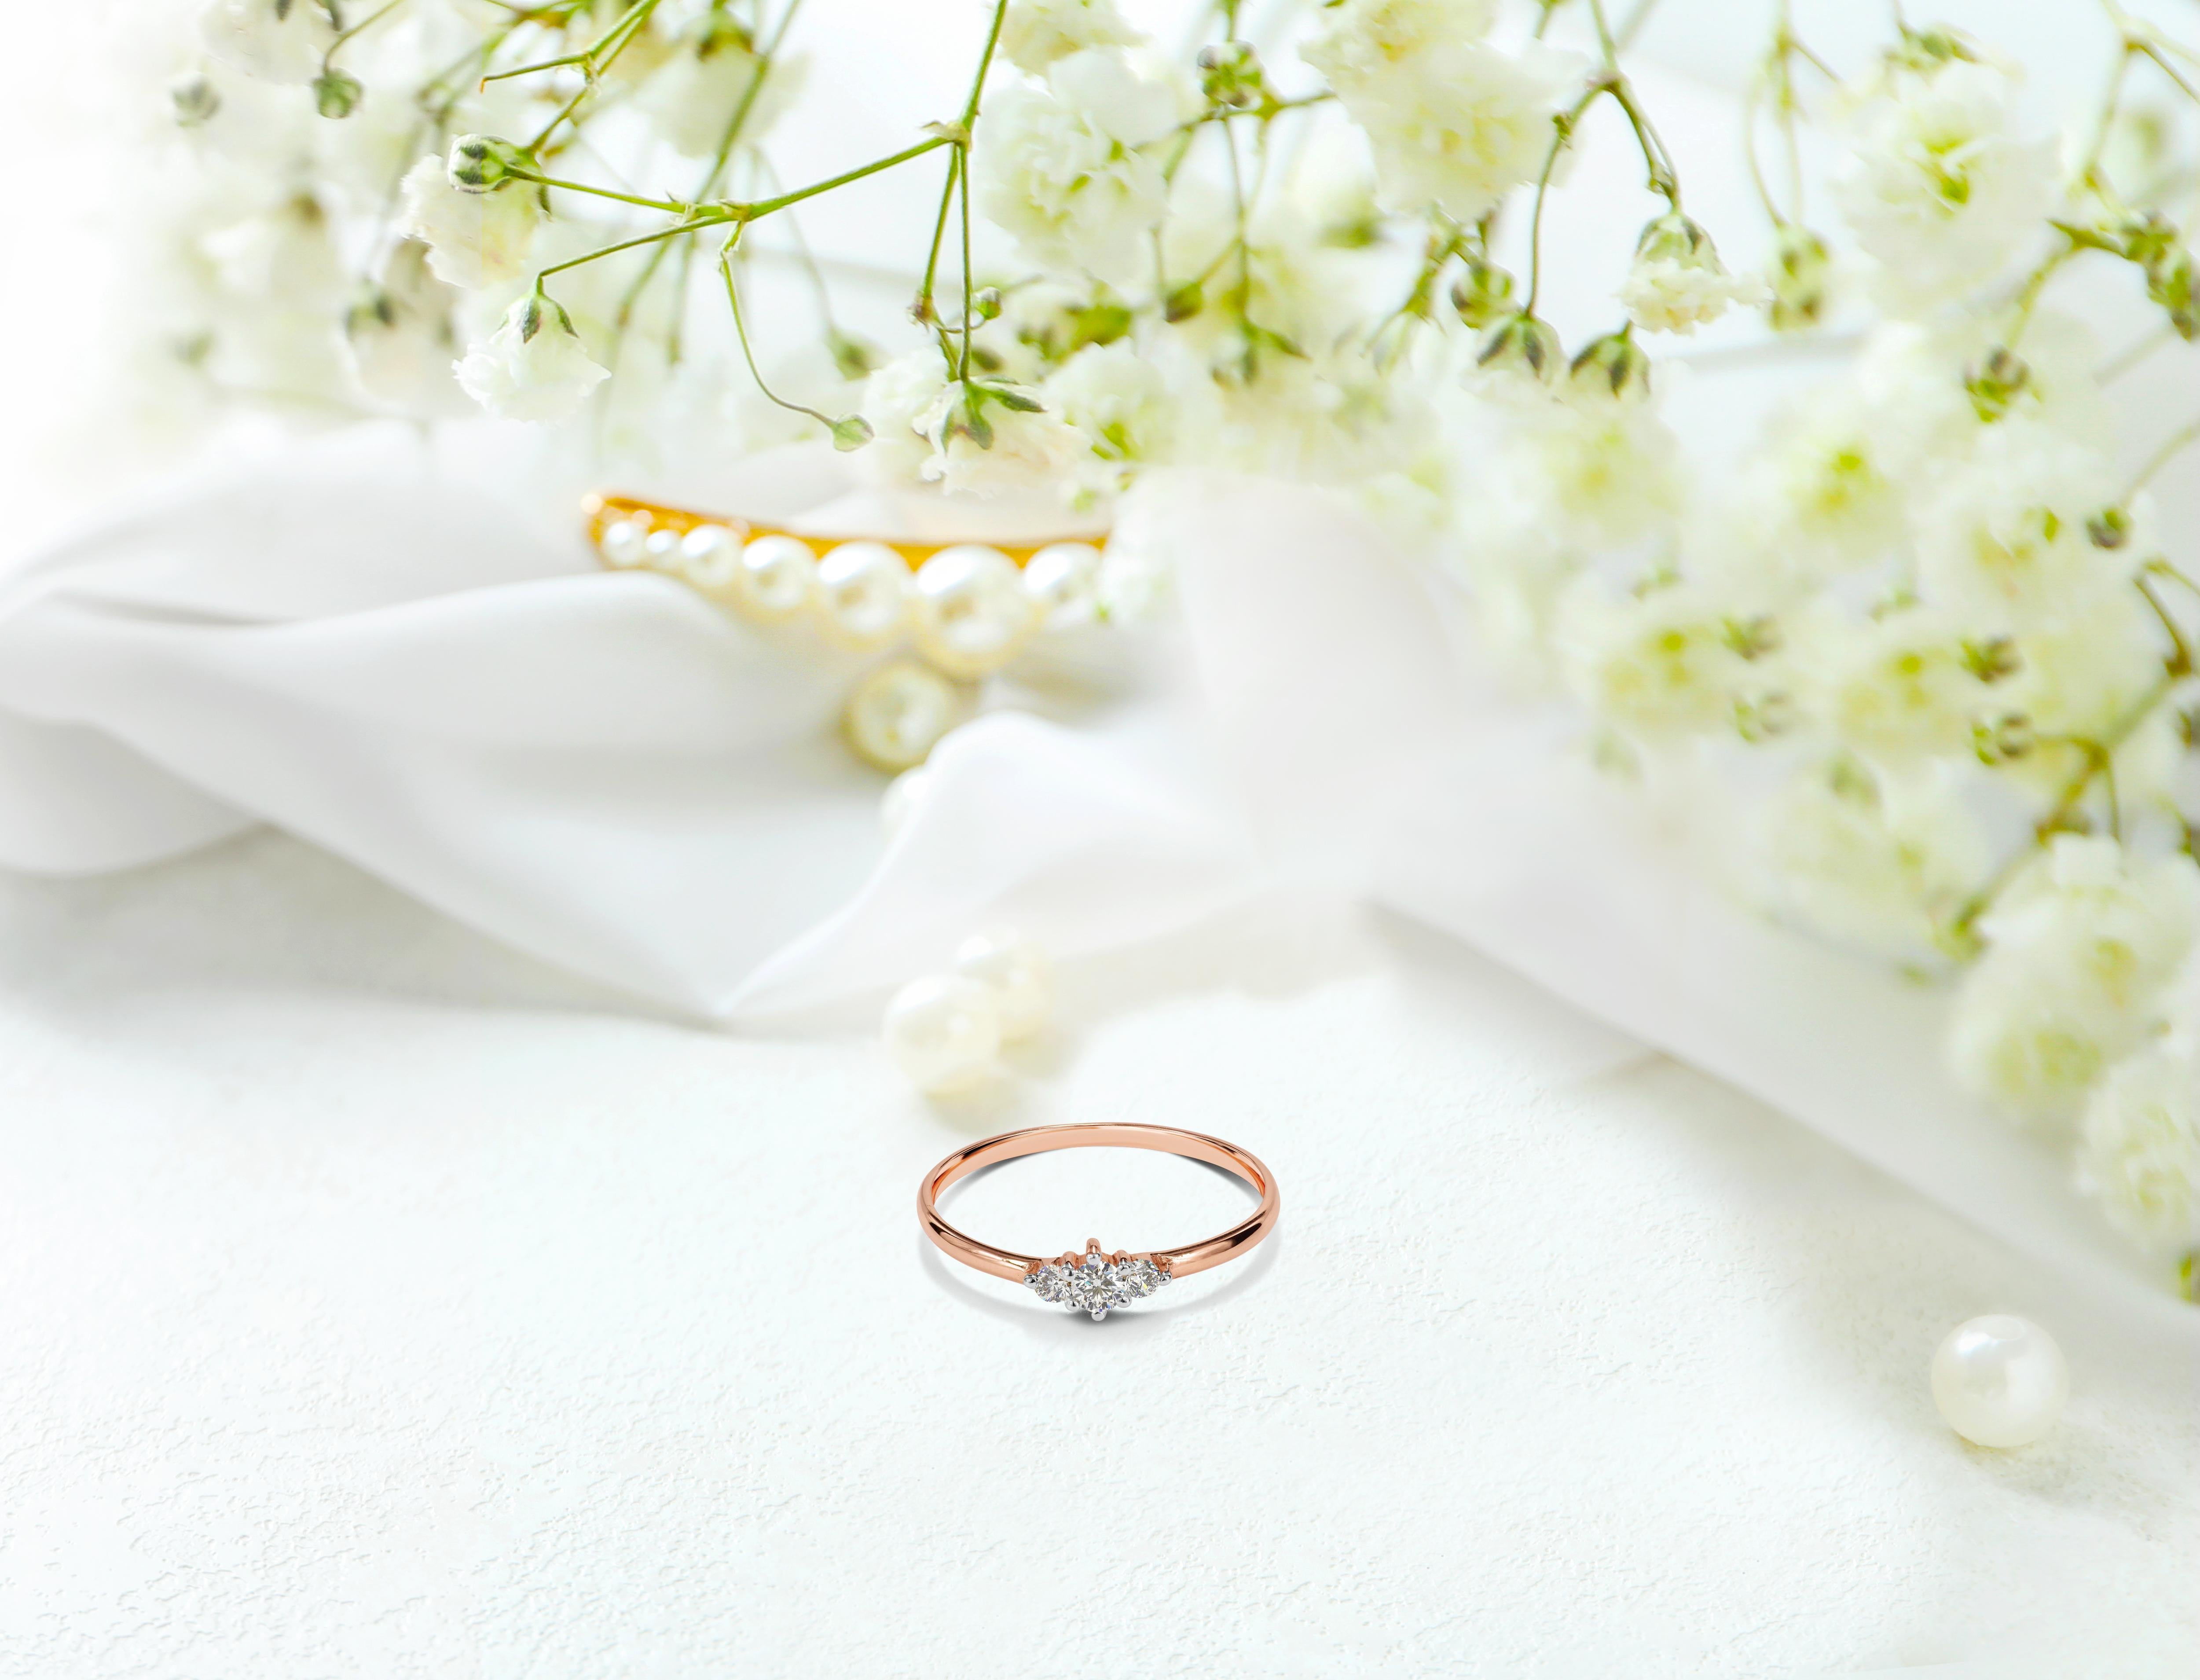 For Sale:  18k Gold Three Stone Diamond Engagement Ring Trio Diamond Ring 12